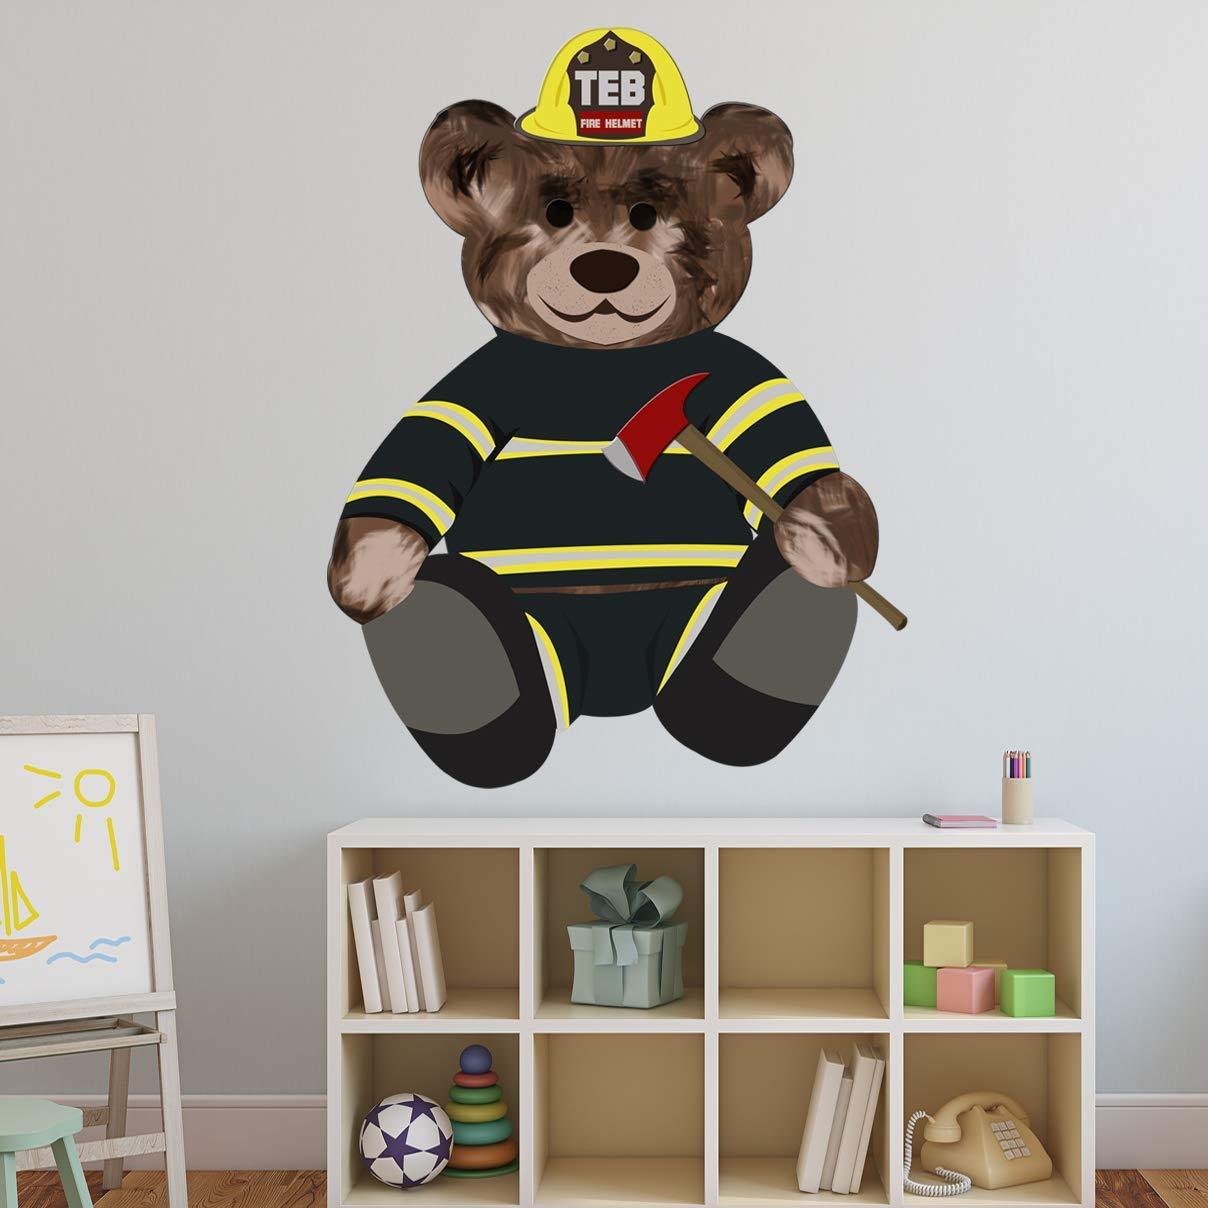 fireman teddy bear